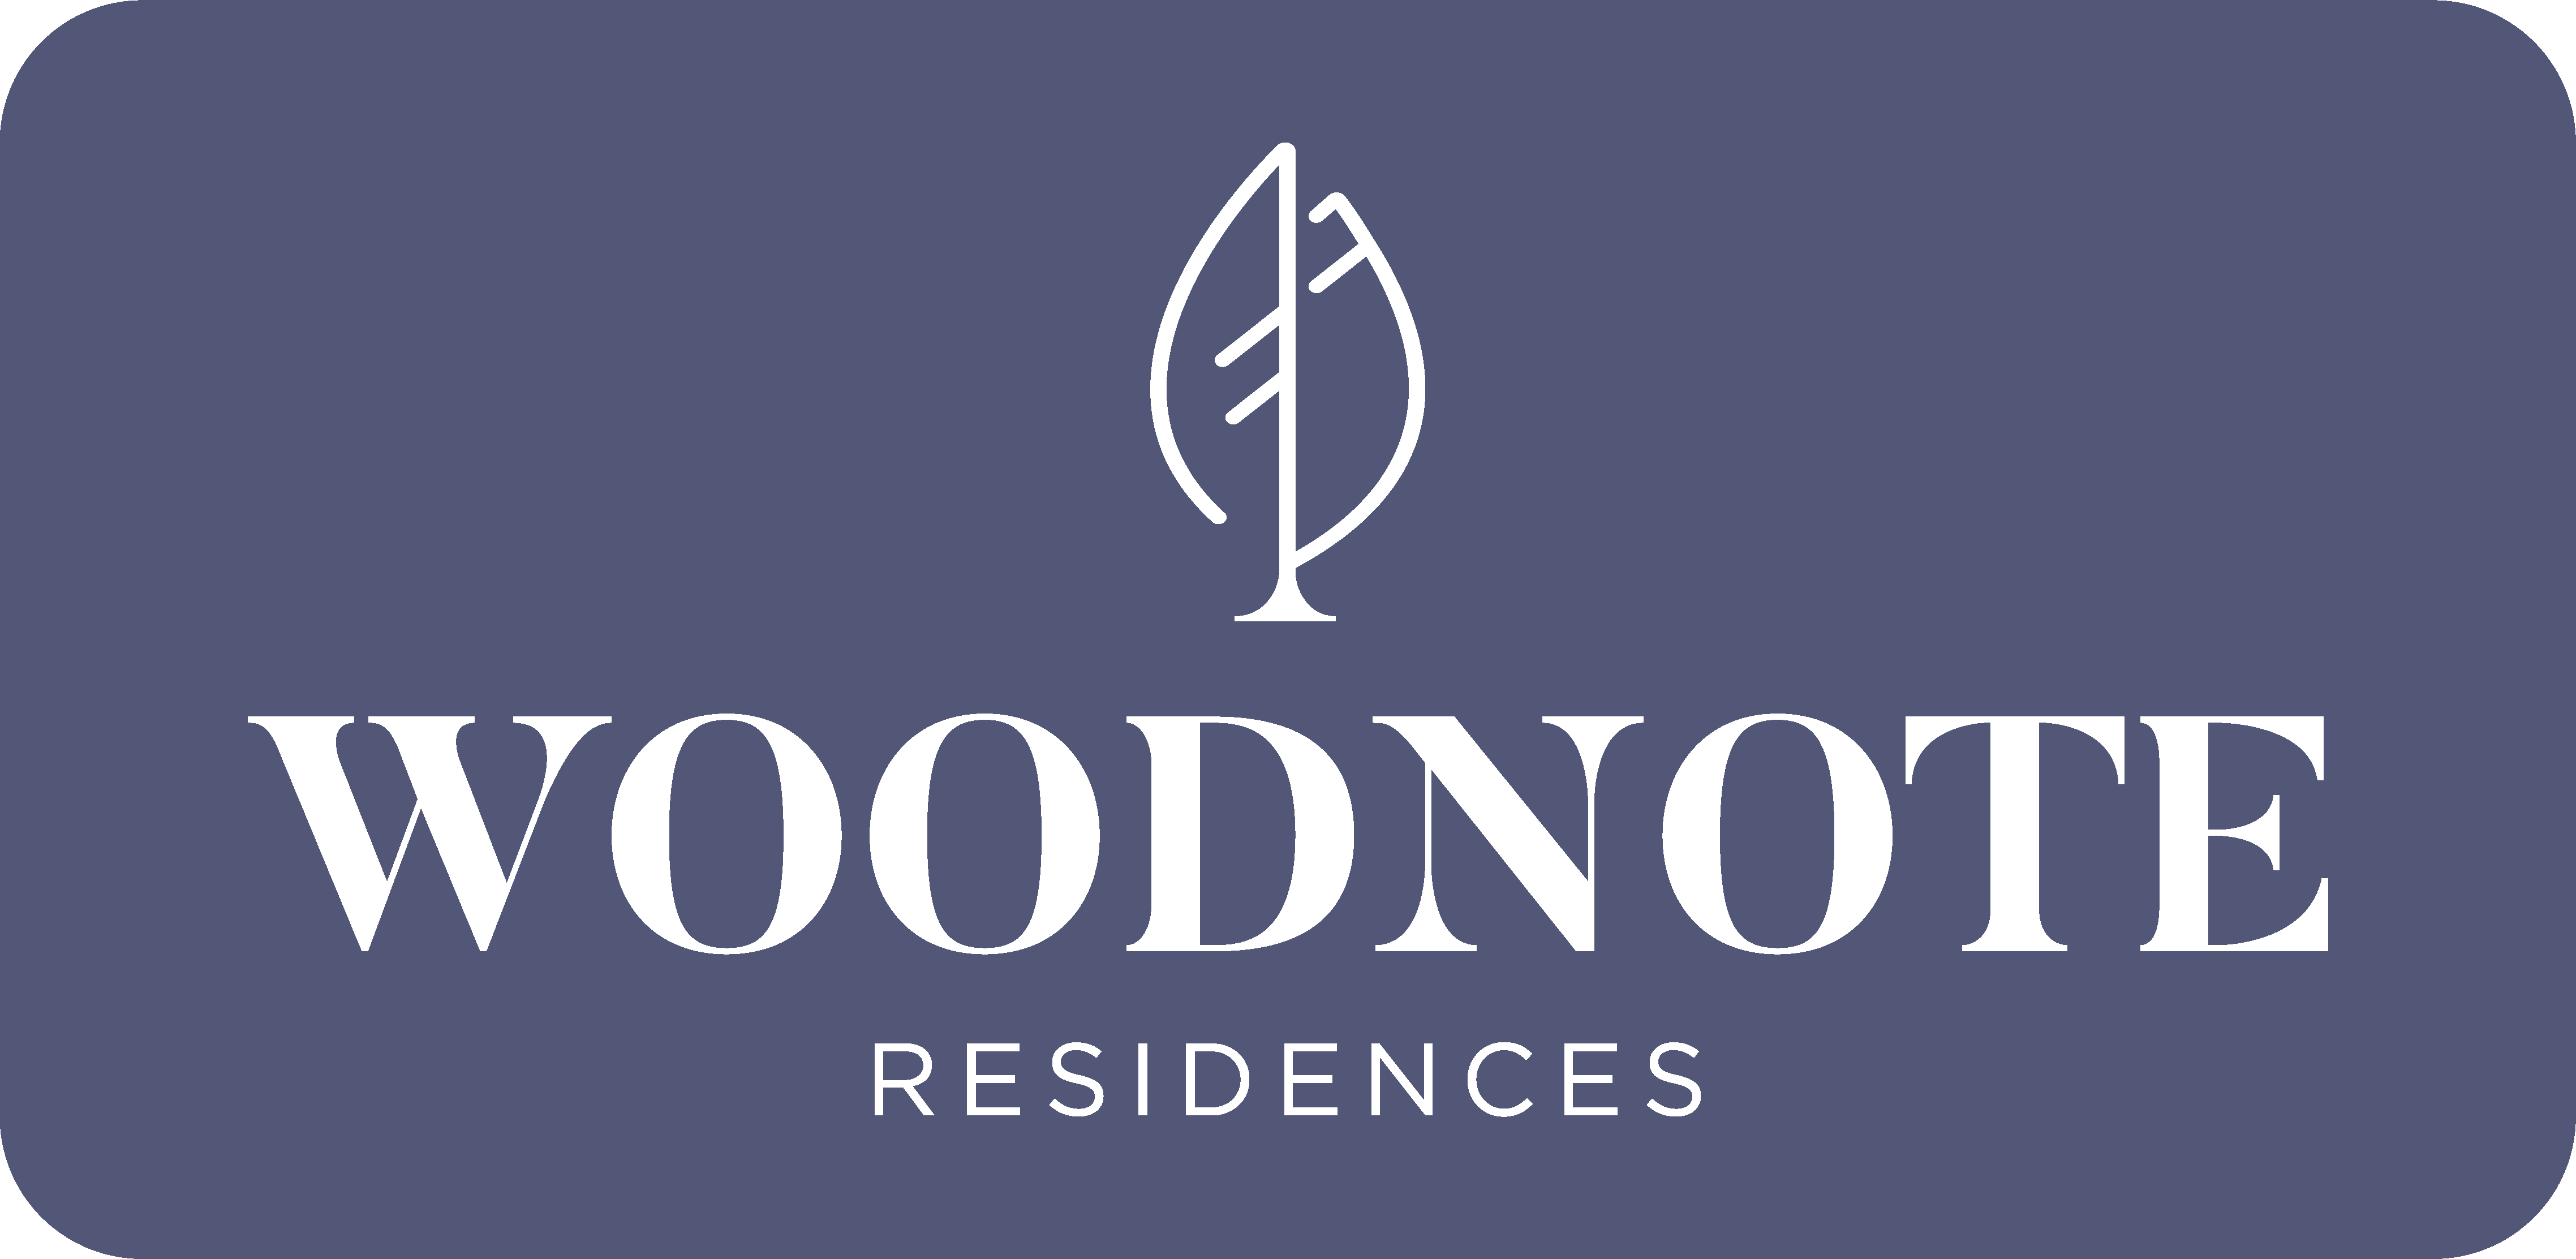 Woodnote Residences logo